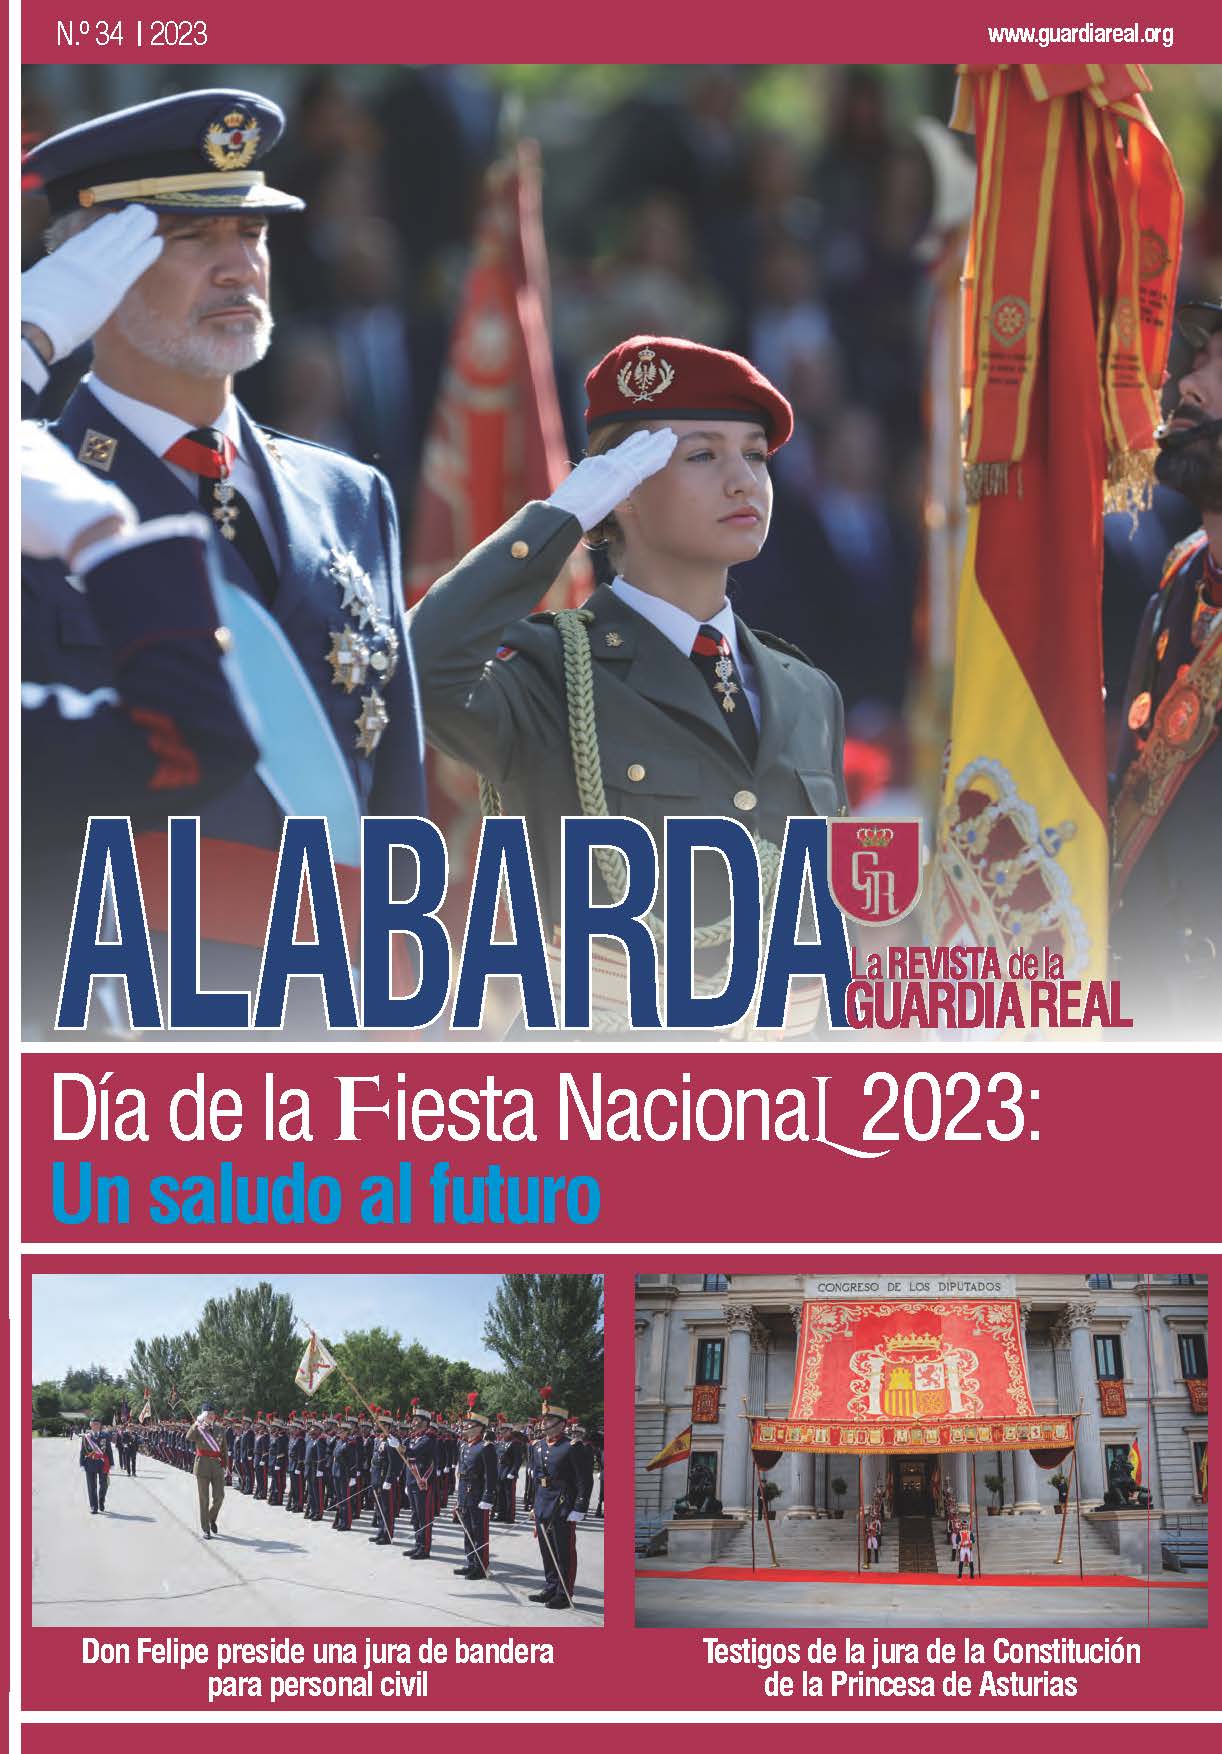 Alabarda 2023